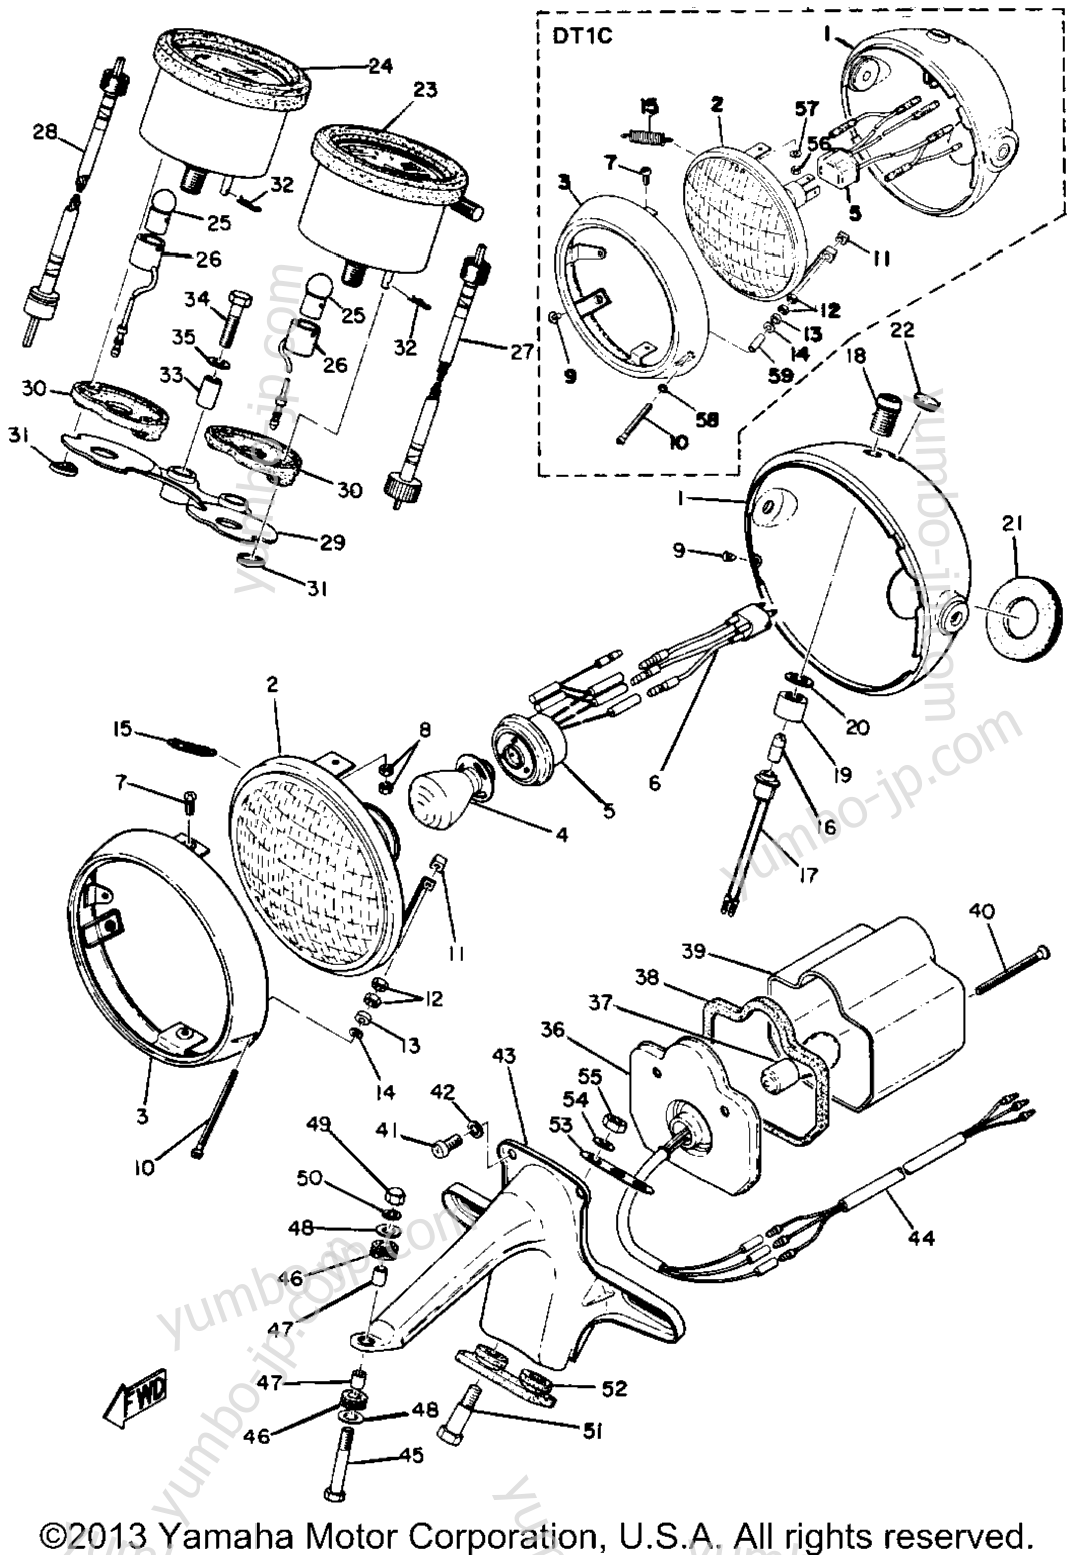 Head Lamp, Tail Lamp & Speedometer для мотоциклов YAMAHA DT1C 1970 г.